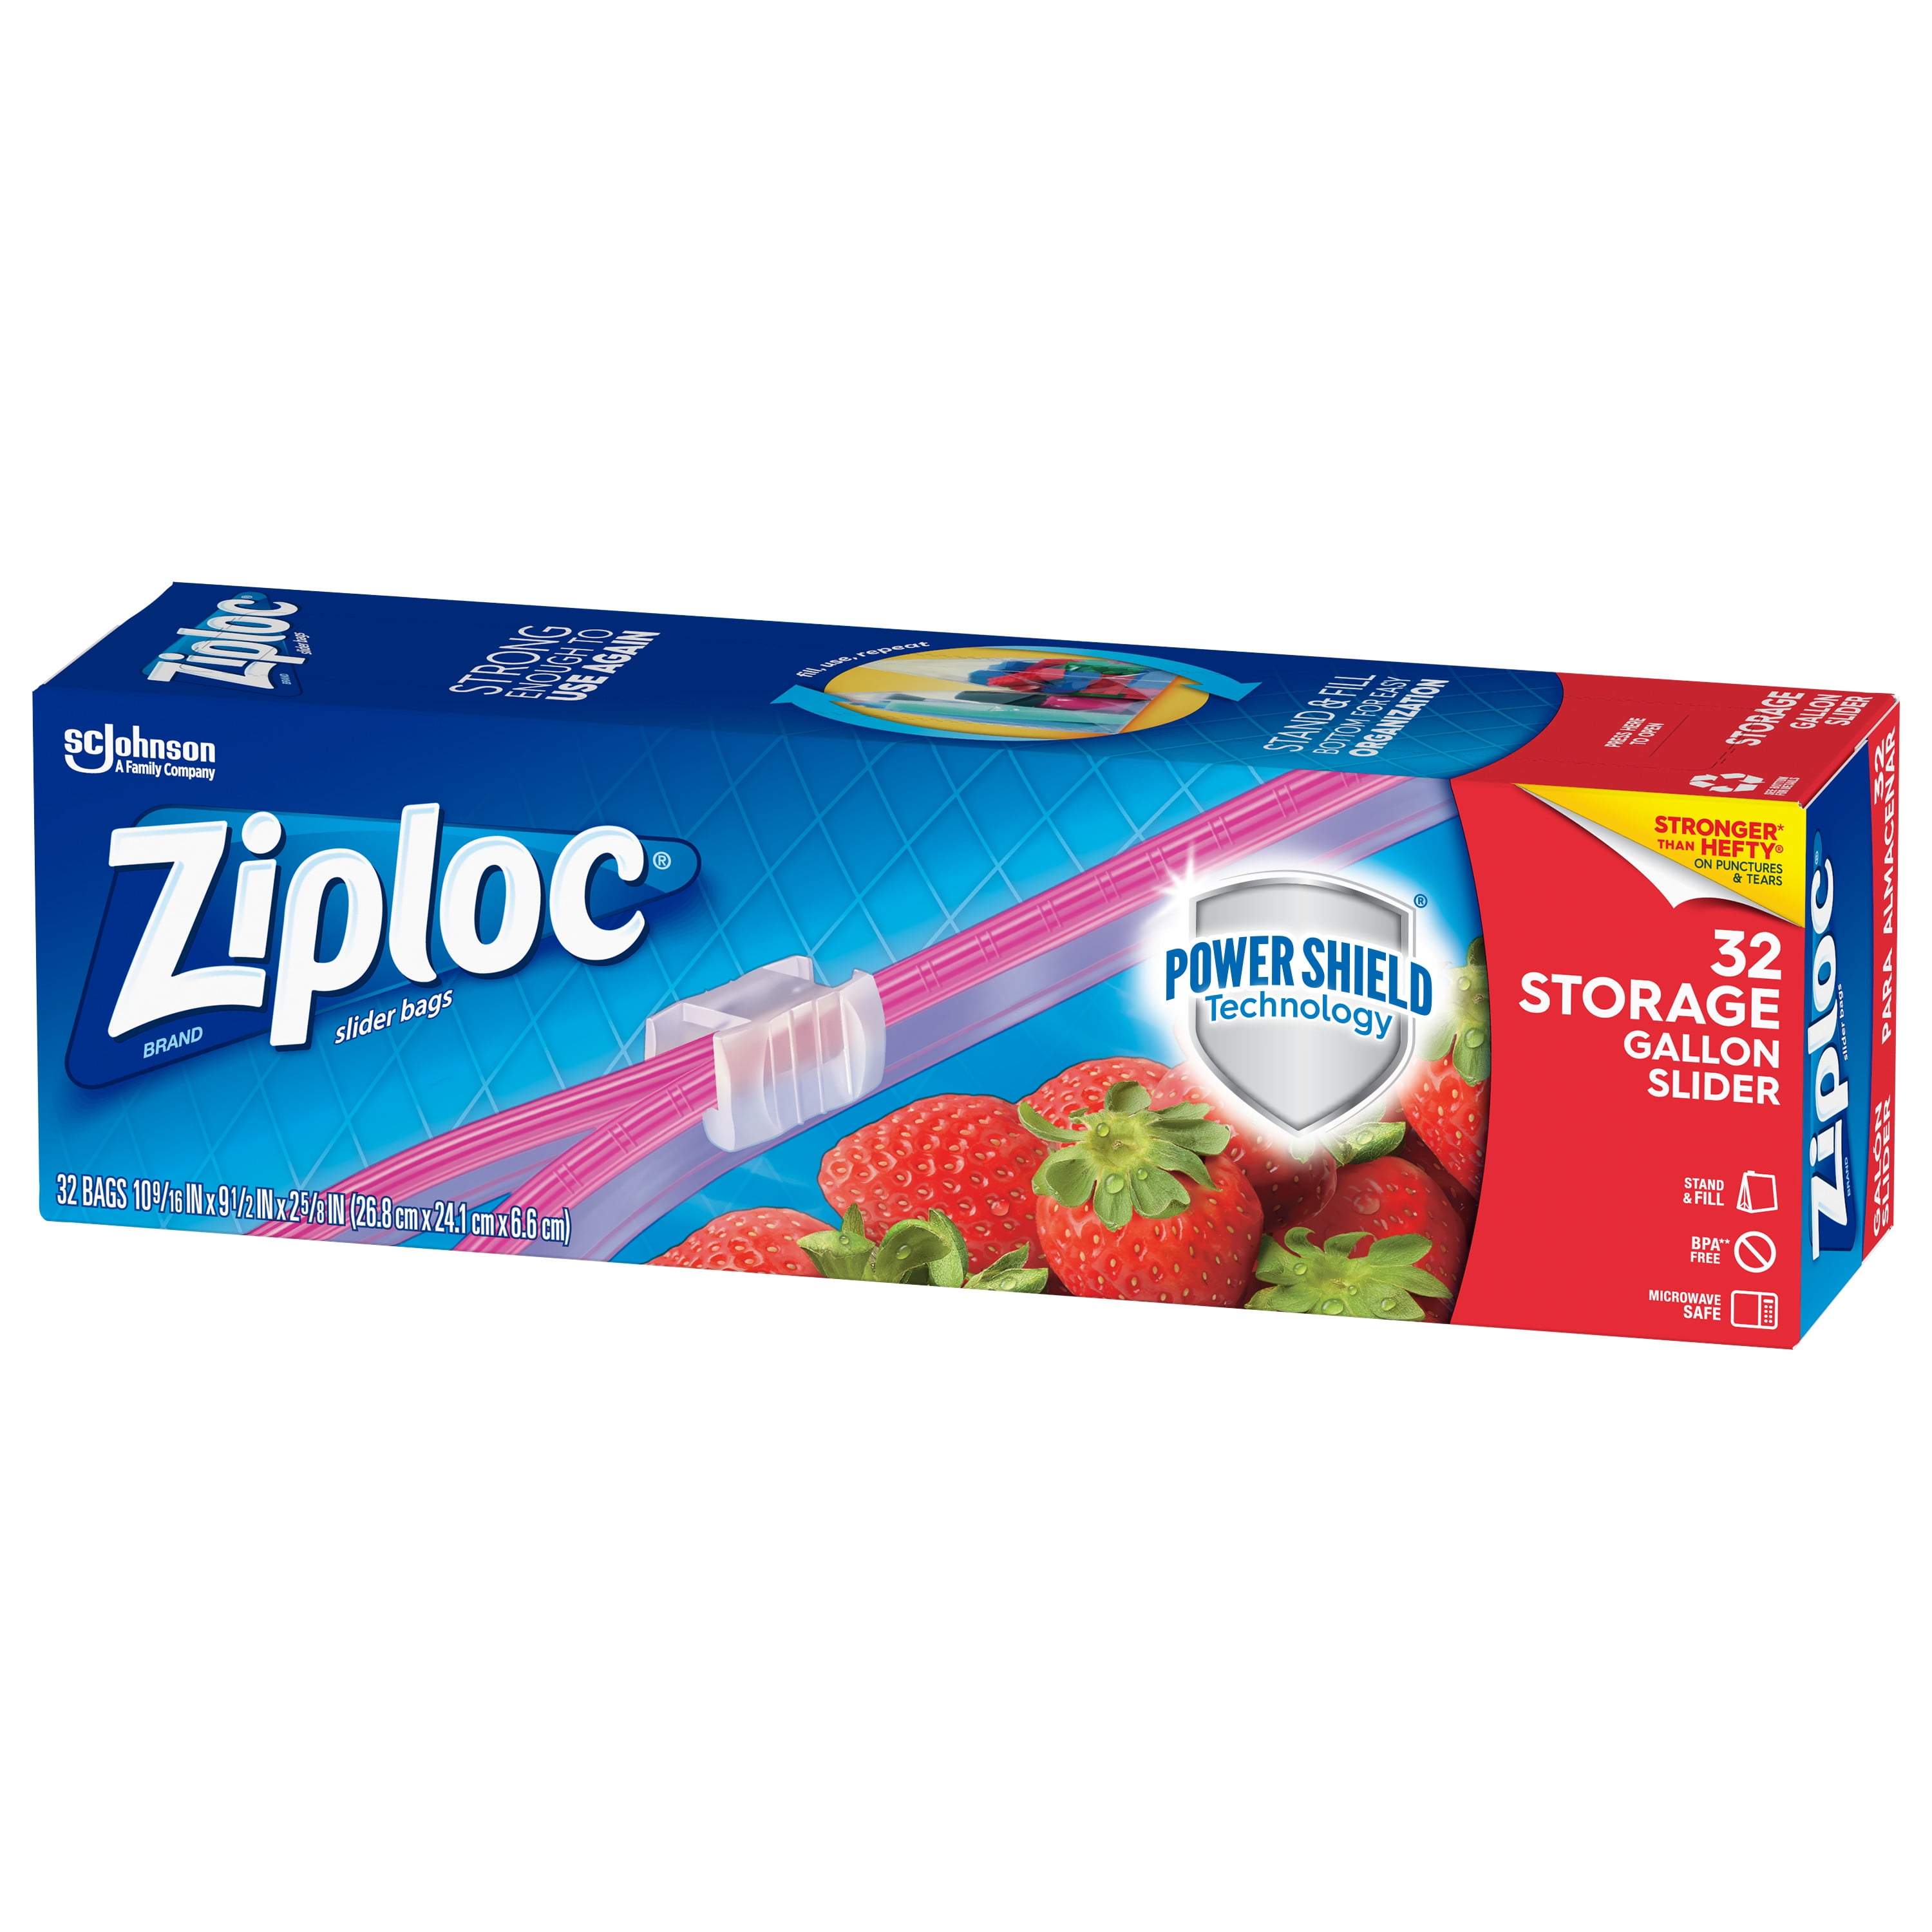 Ziploc Gallon Storage Slider Bags - SJN316489 